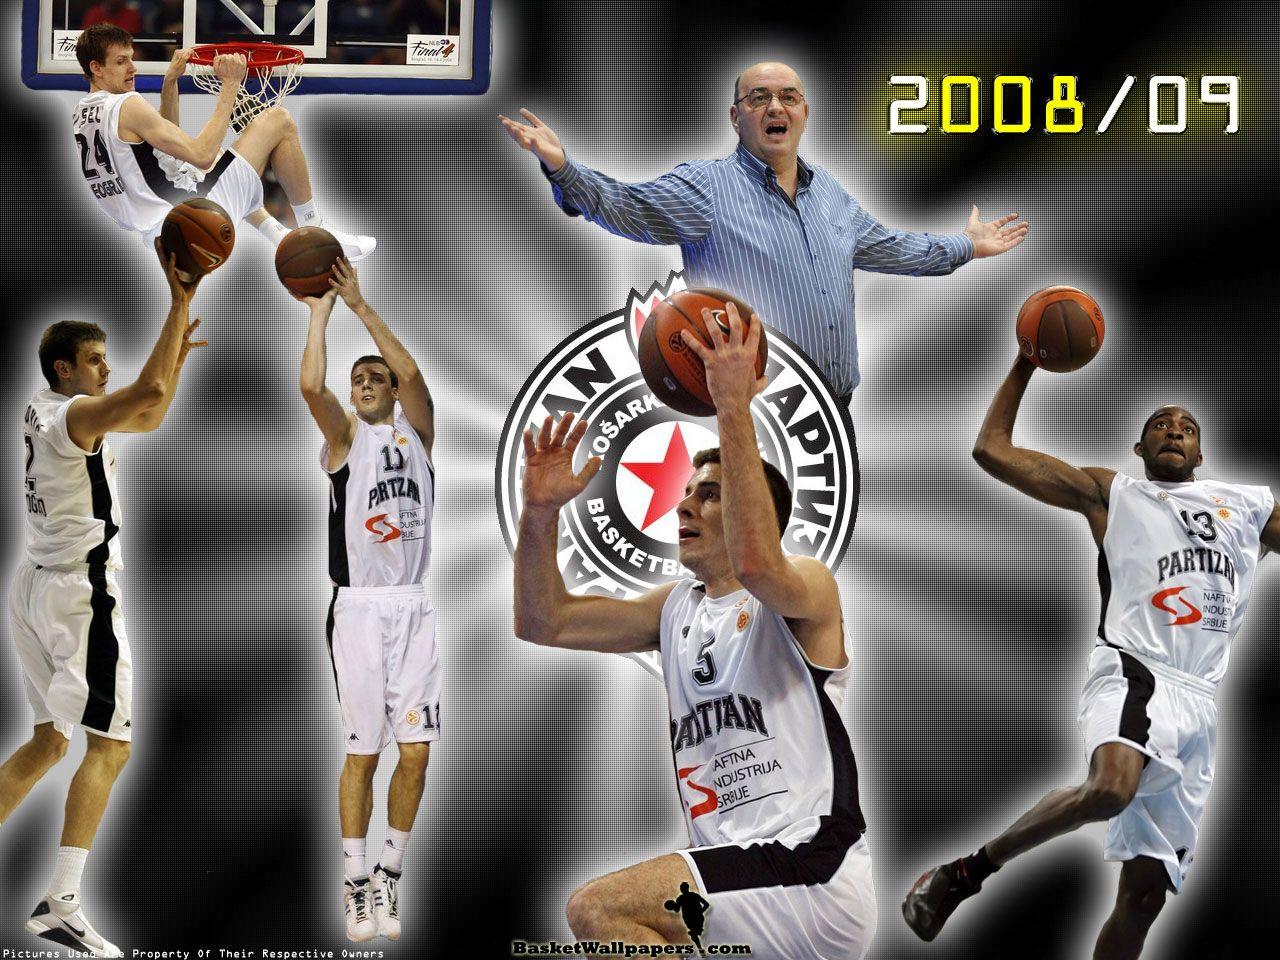 Partizan Belgrade 2008 09 Wallpaper. Basketball Wallpaper At